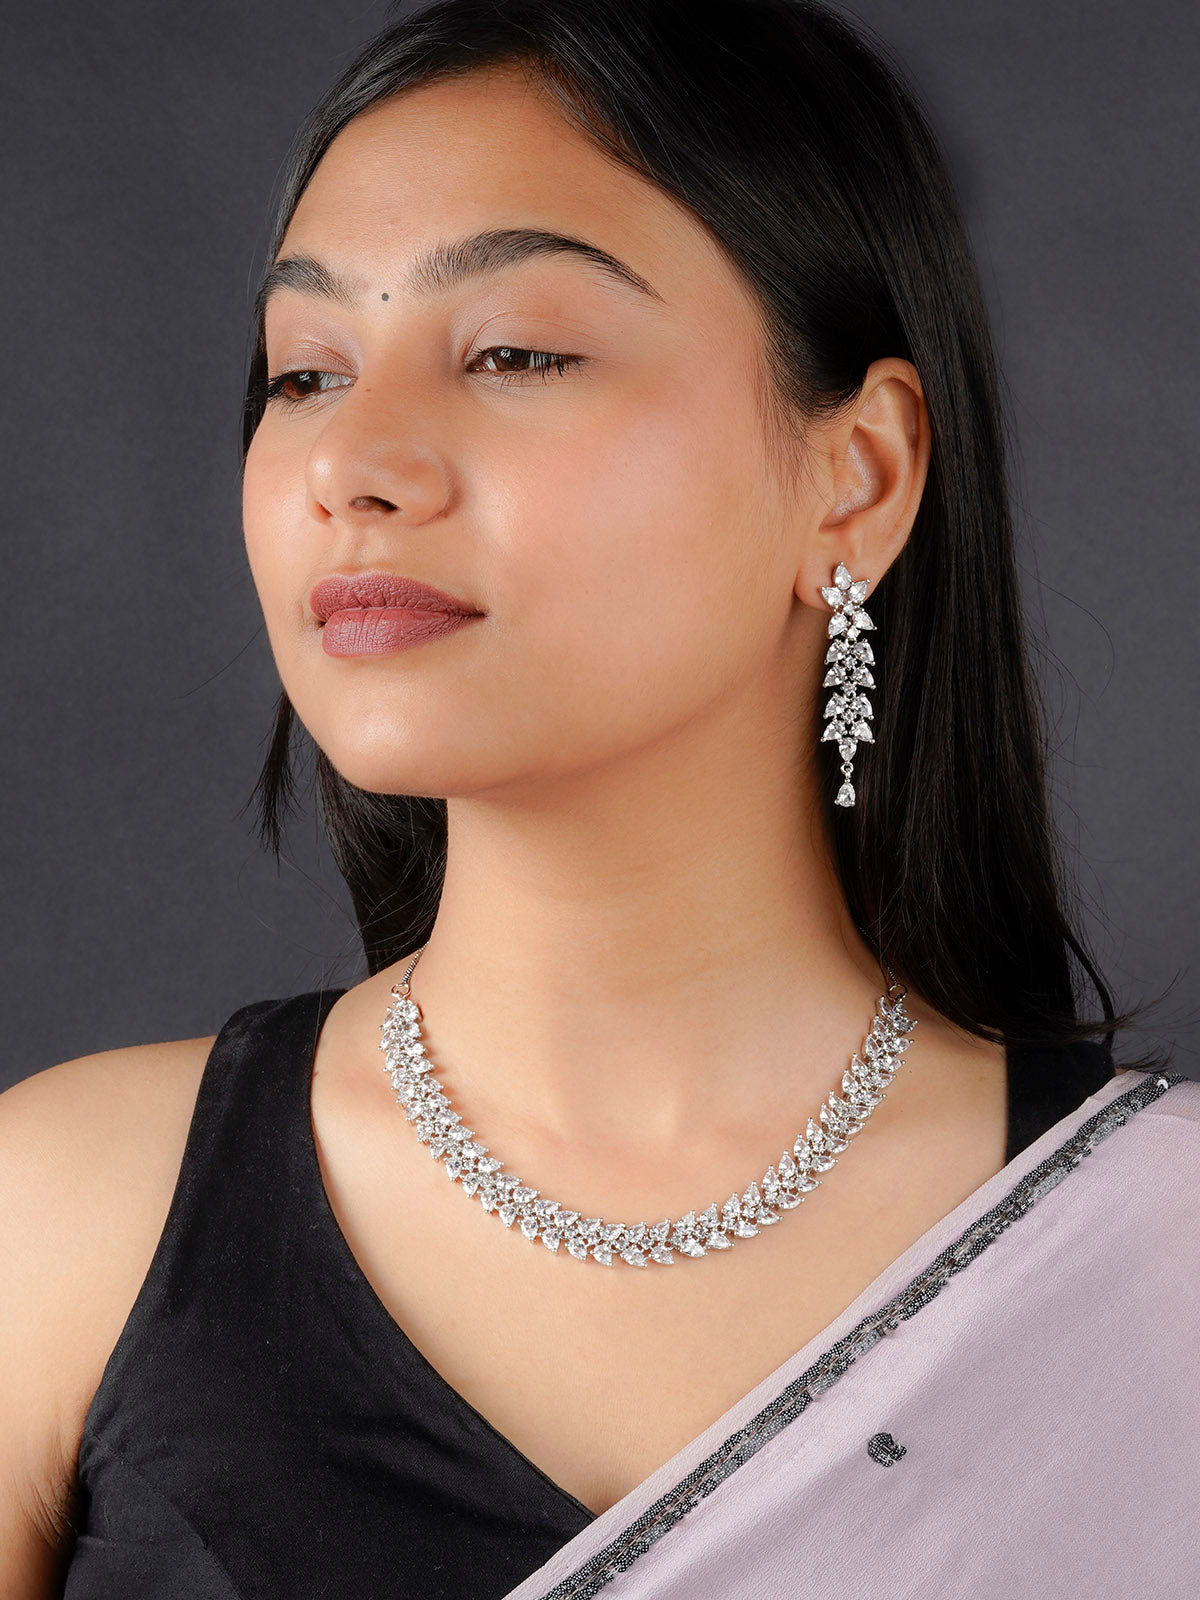 CZSET307 - White Color Silver Plated Faux Diamond Necklace Set